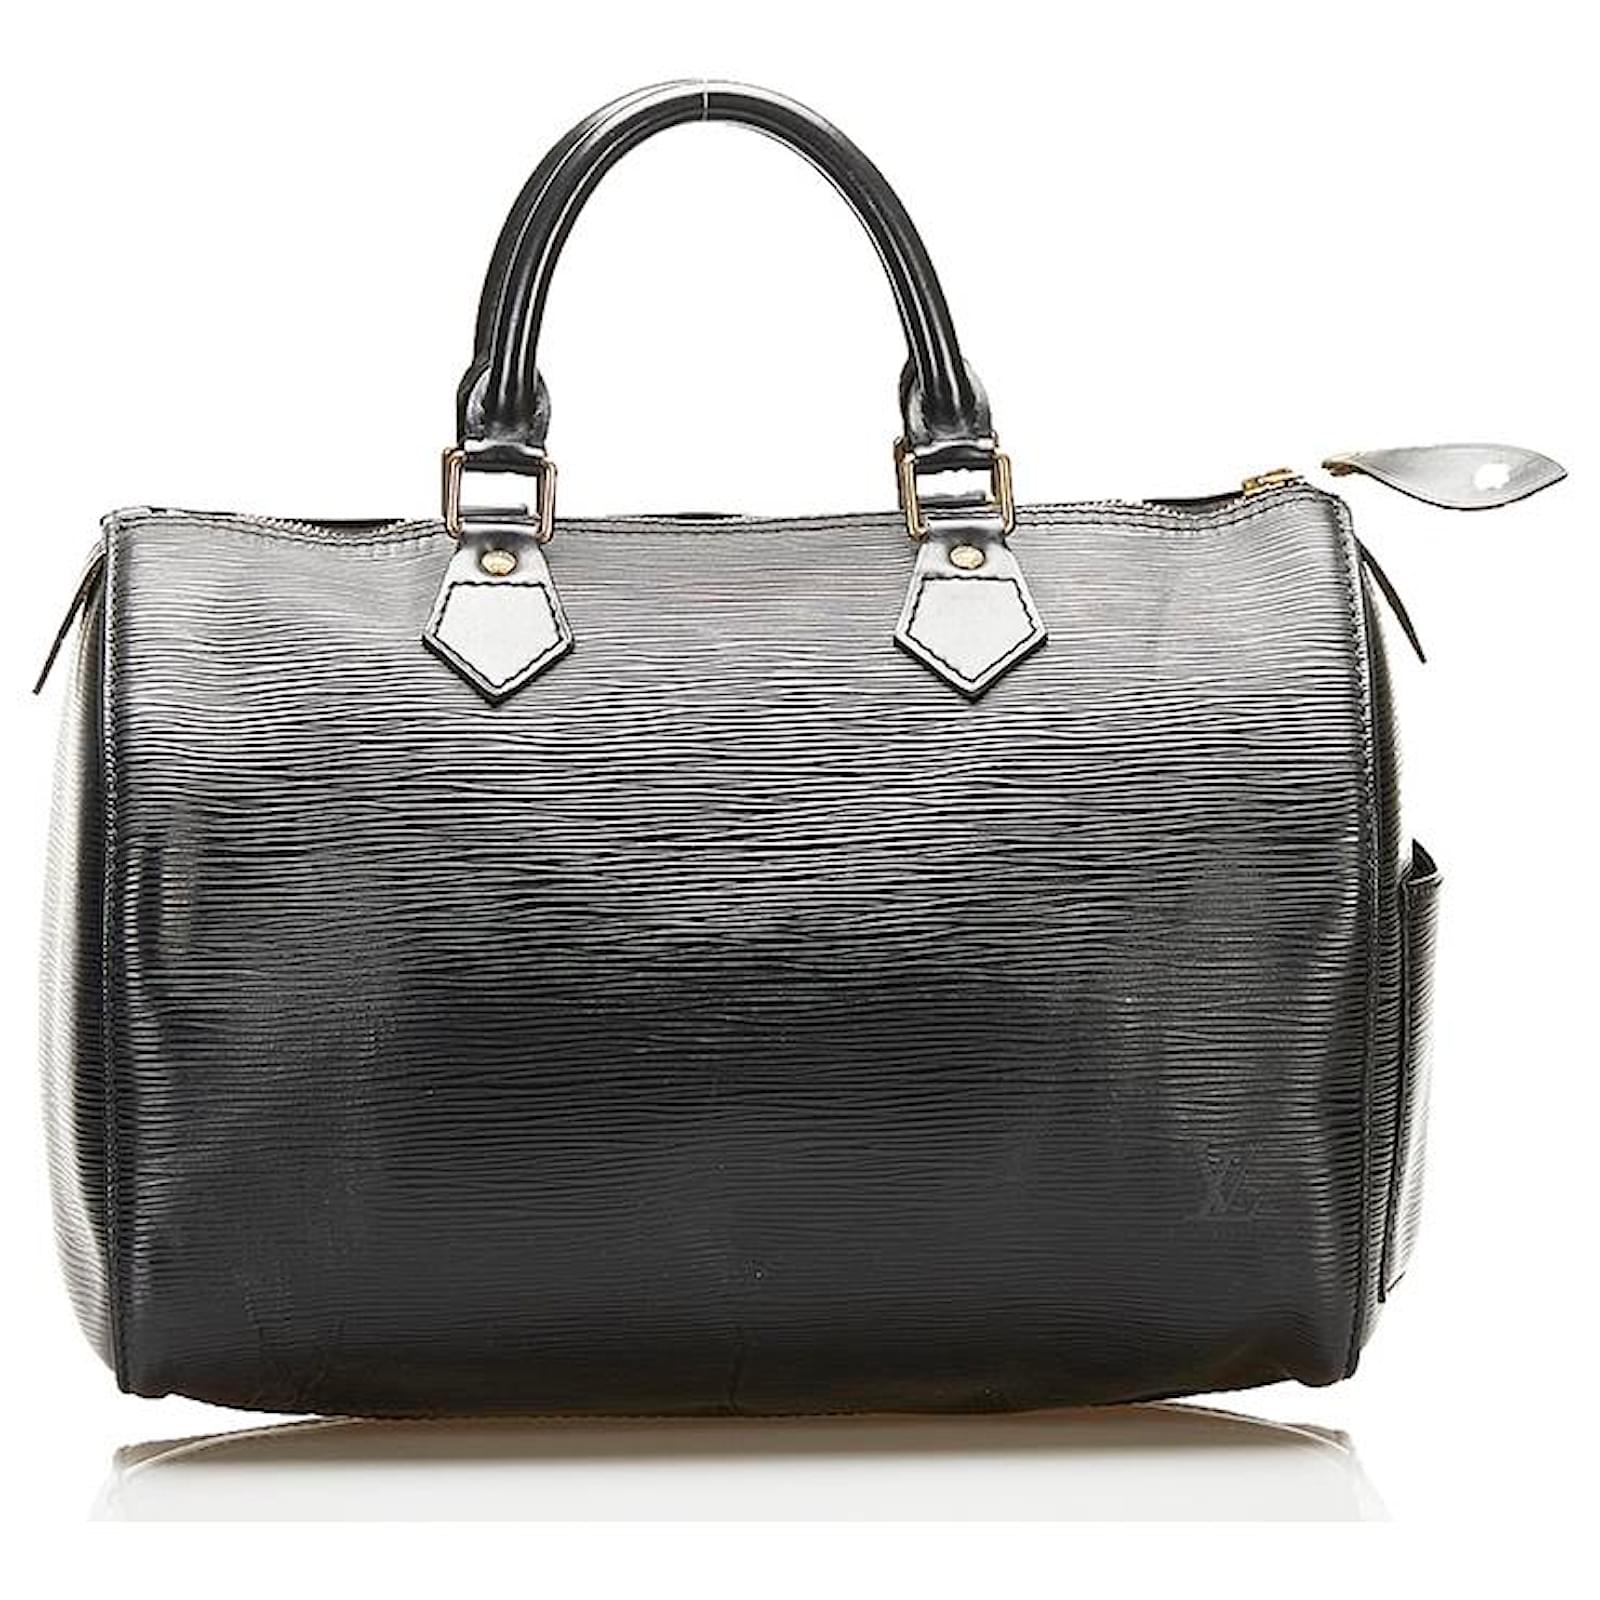 Louis Vuitton Speedy 30 cm Editions Limitées handbag in black